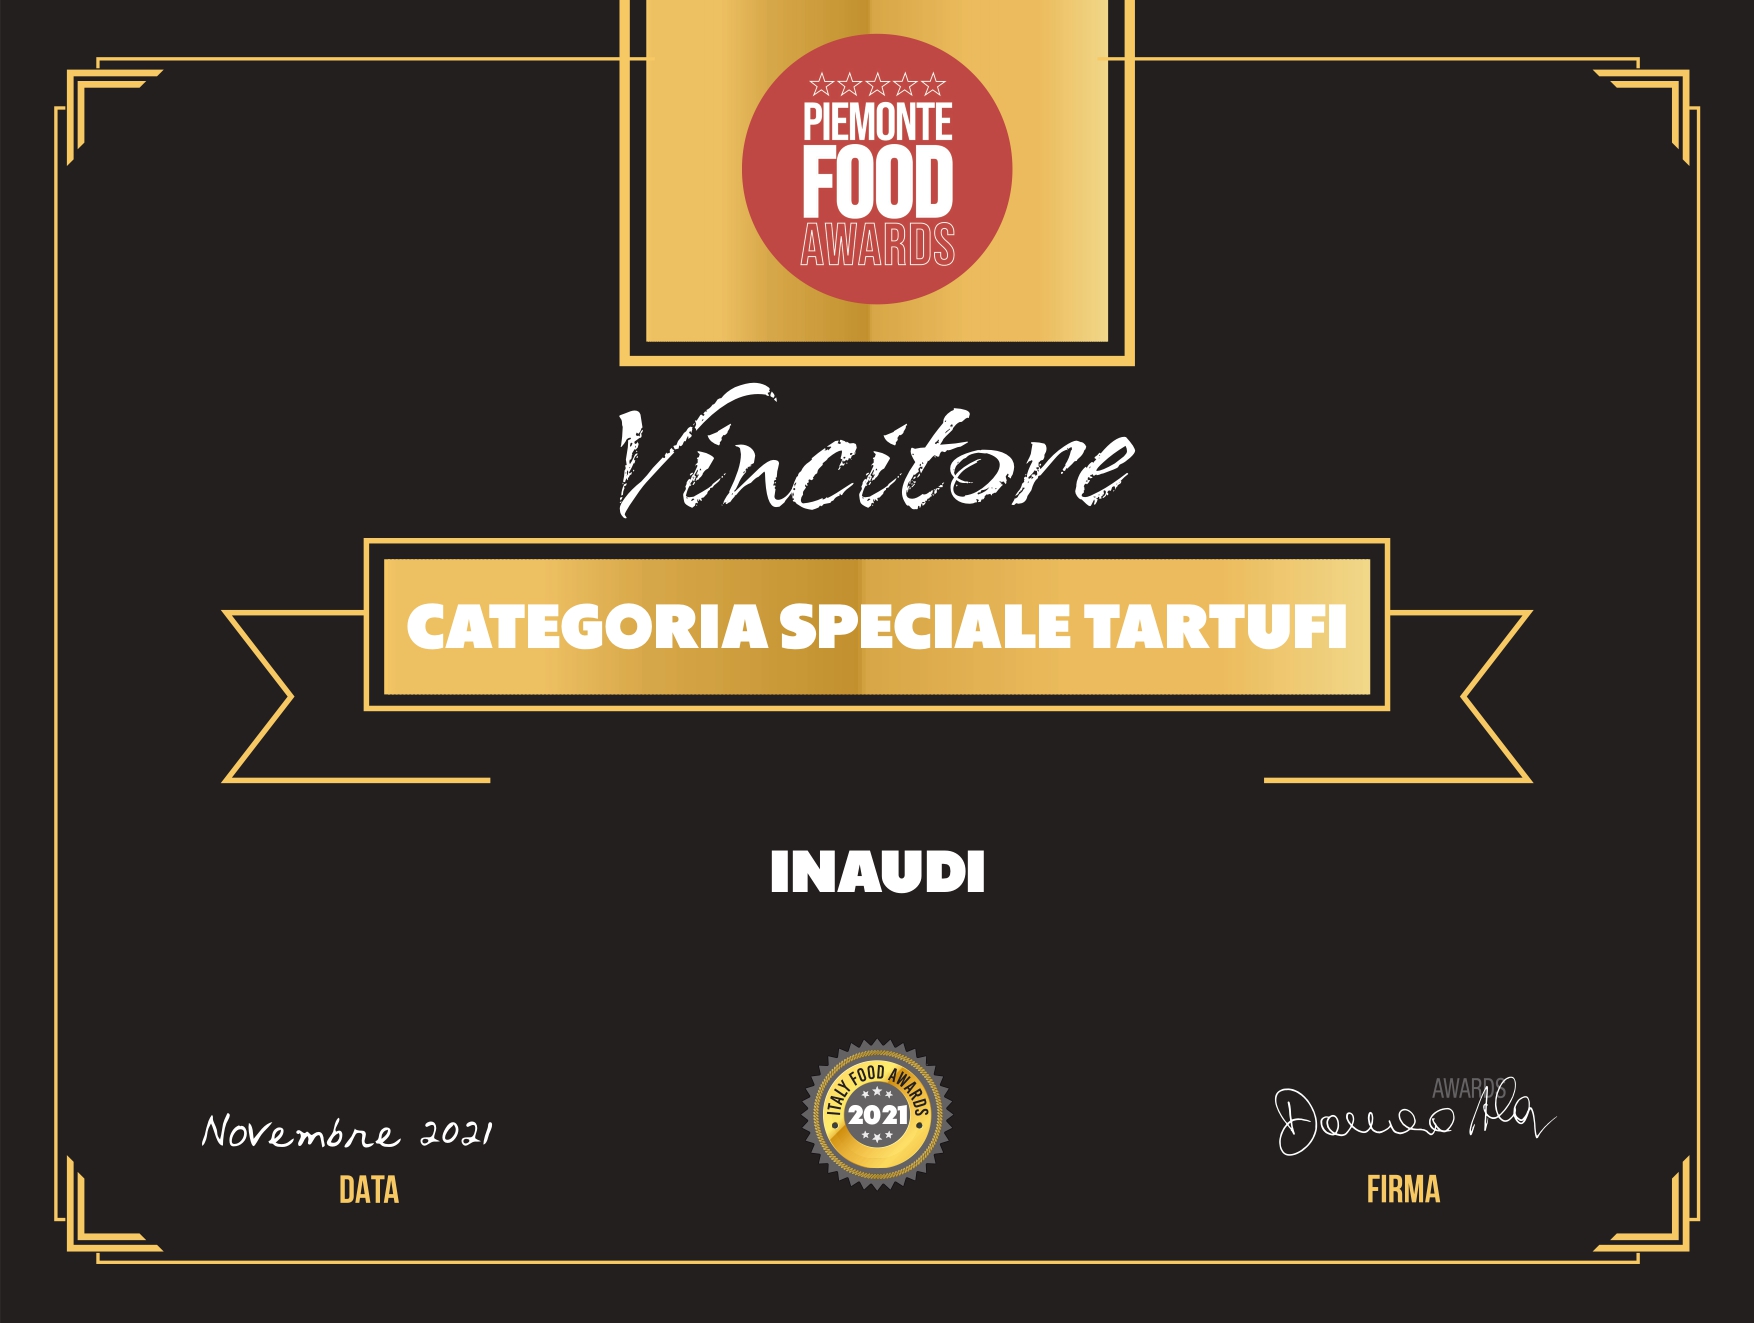 Inaudi vincitore Piemonte Food Awards